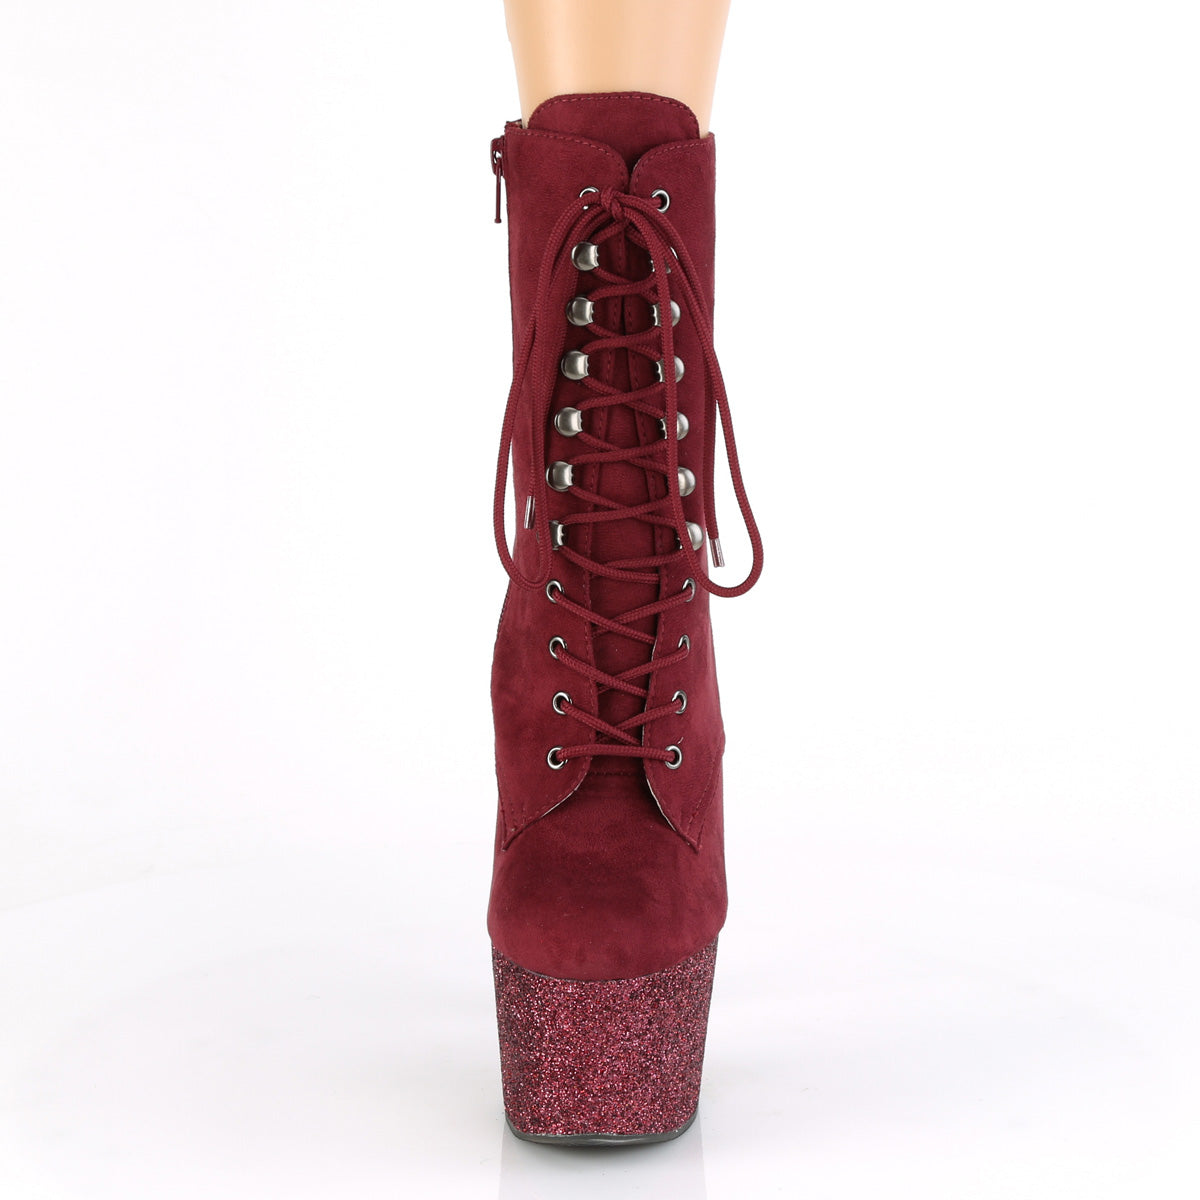 Pleaser Womens Ankle Boots ADORE-1020FSMG Burgundy F. Suede/Burgundy Multi Mini Gltr